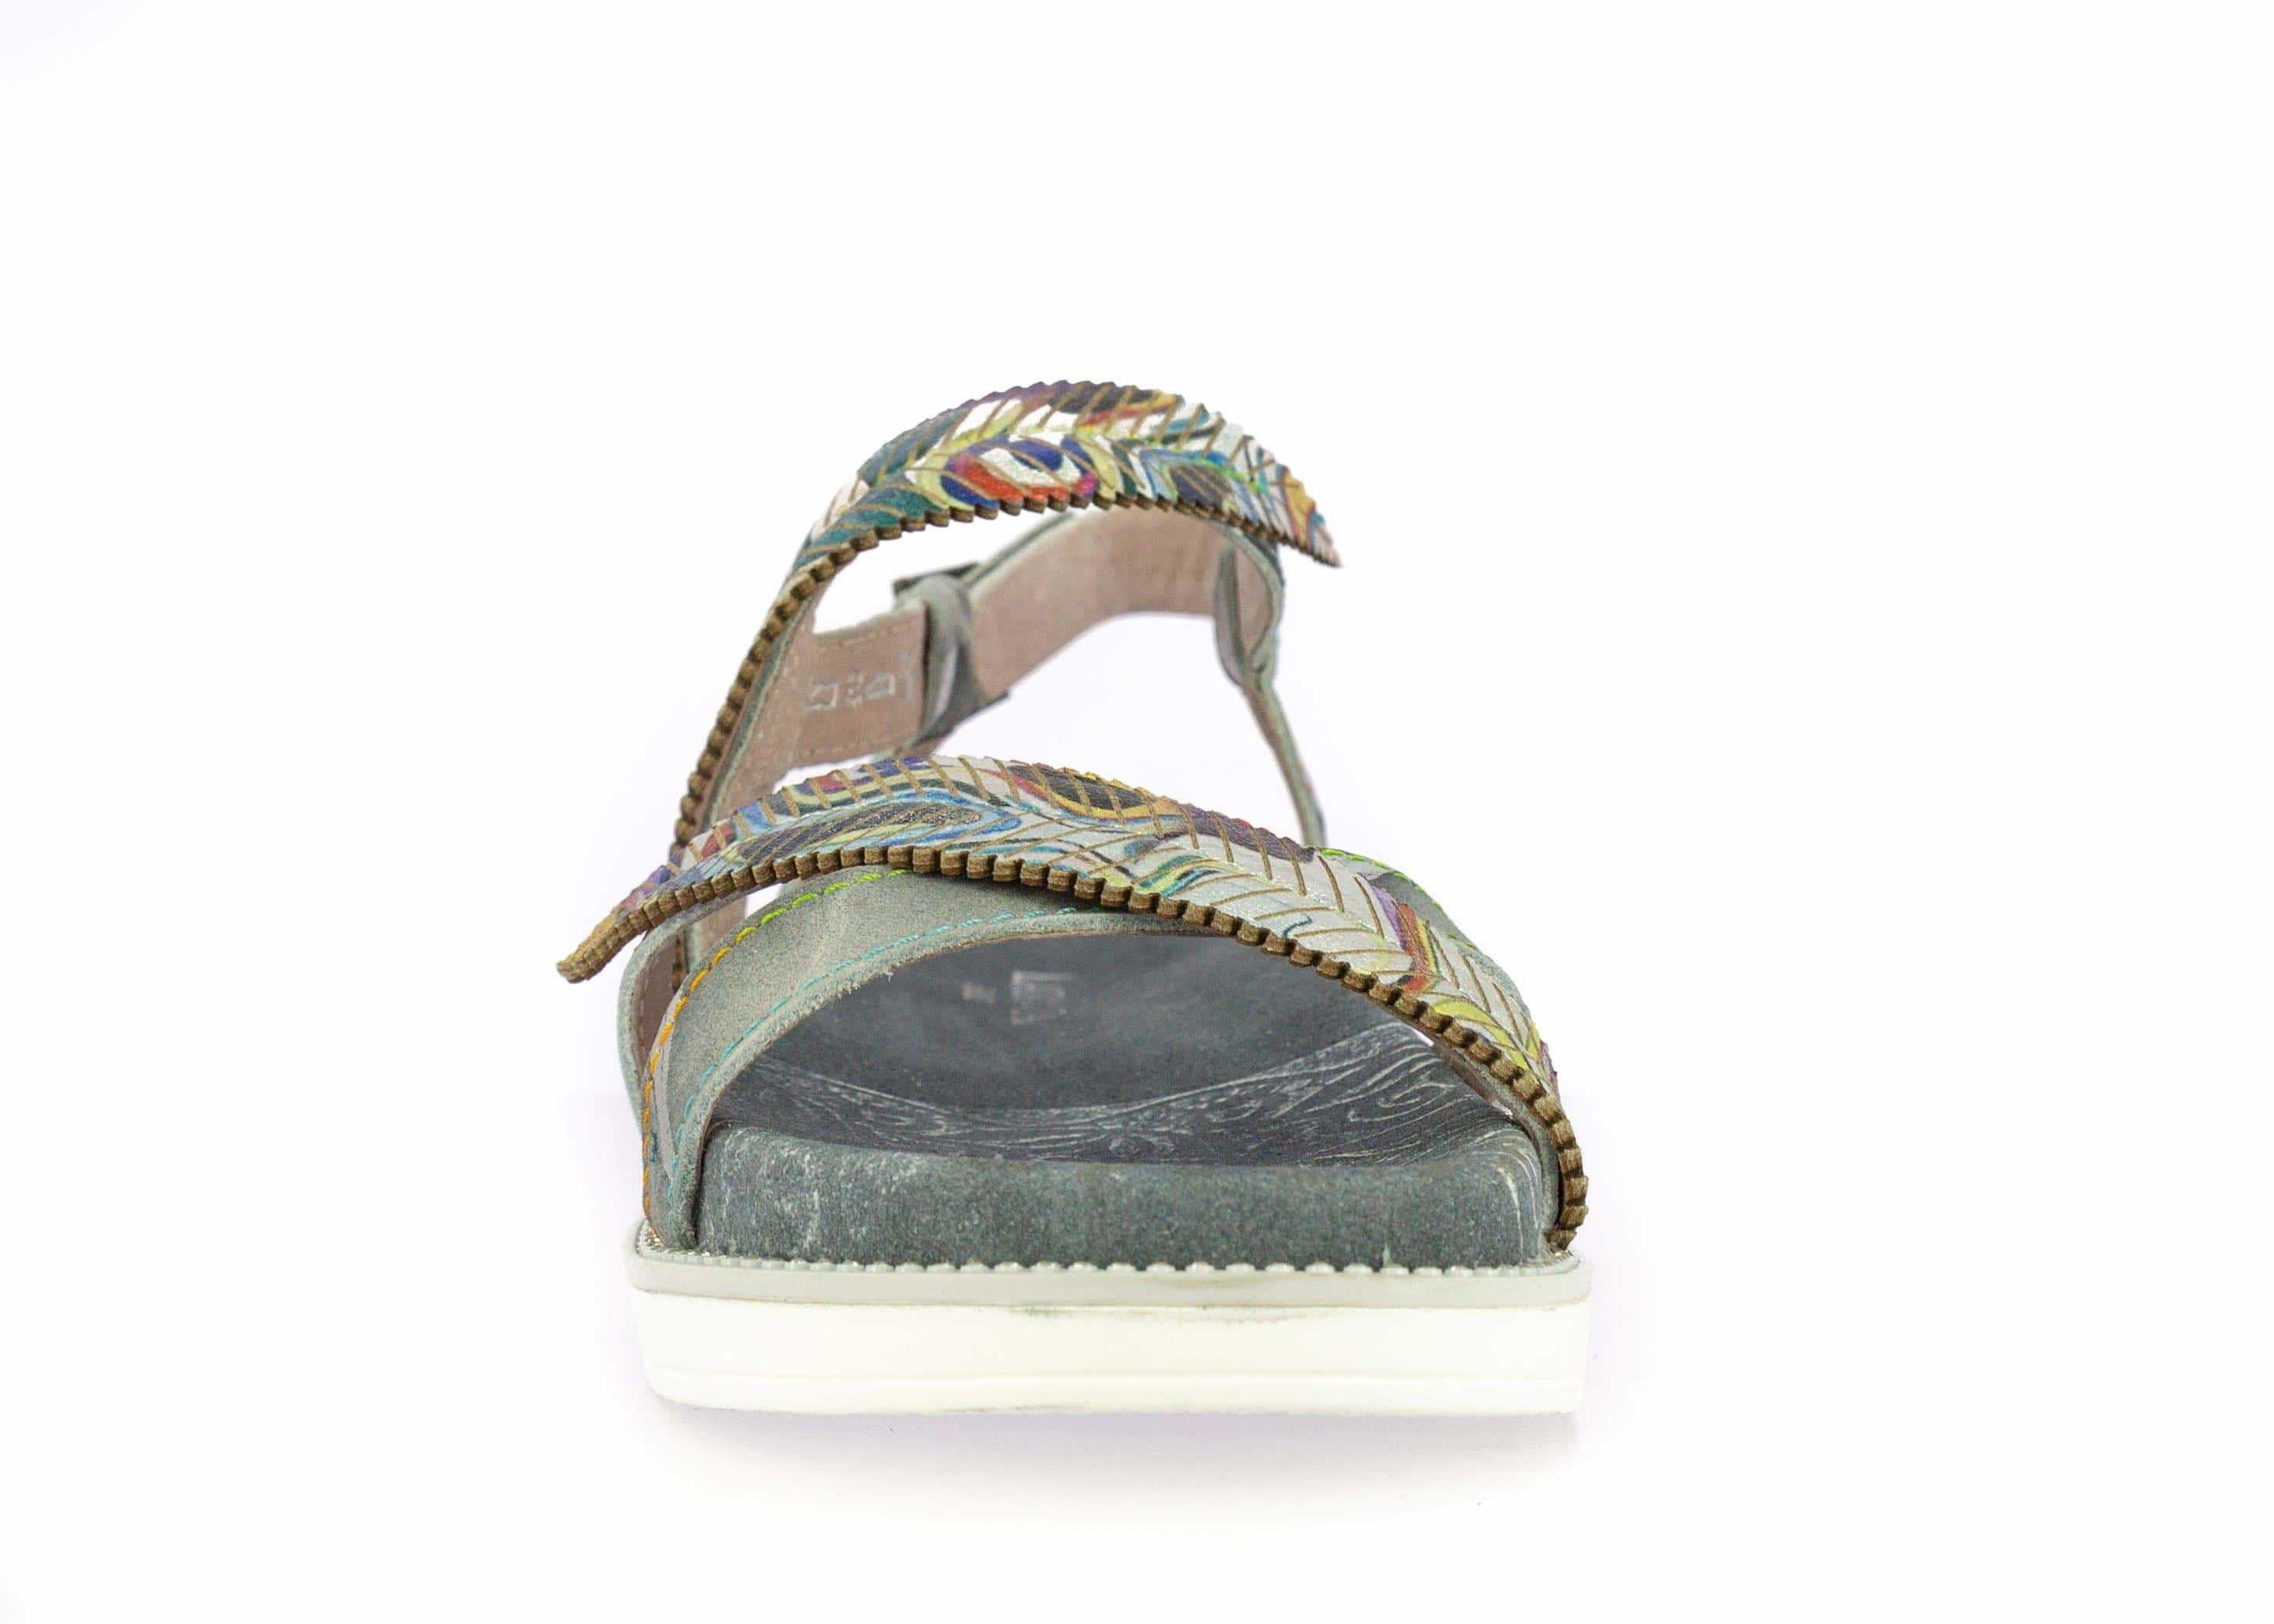 Shoe FACUCONO11 - Sandal